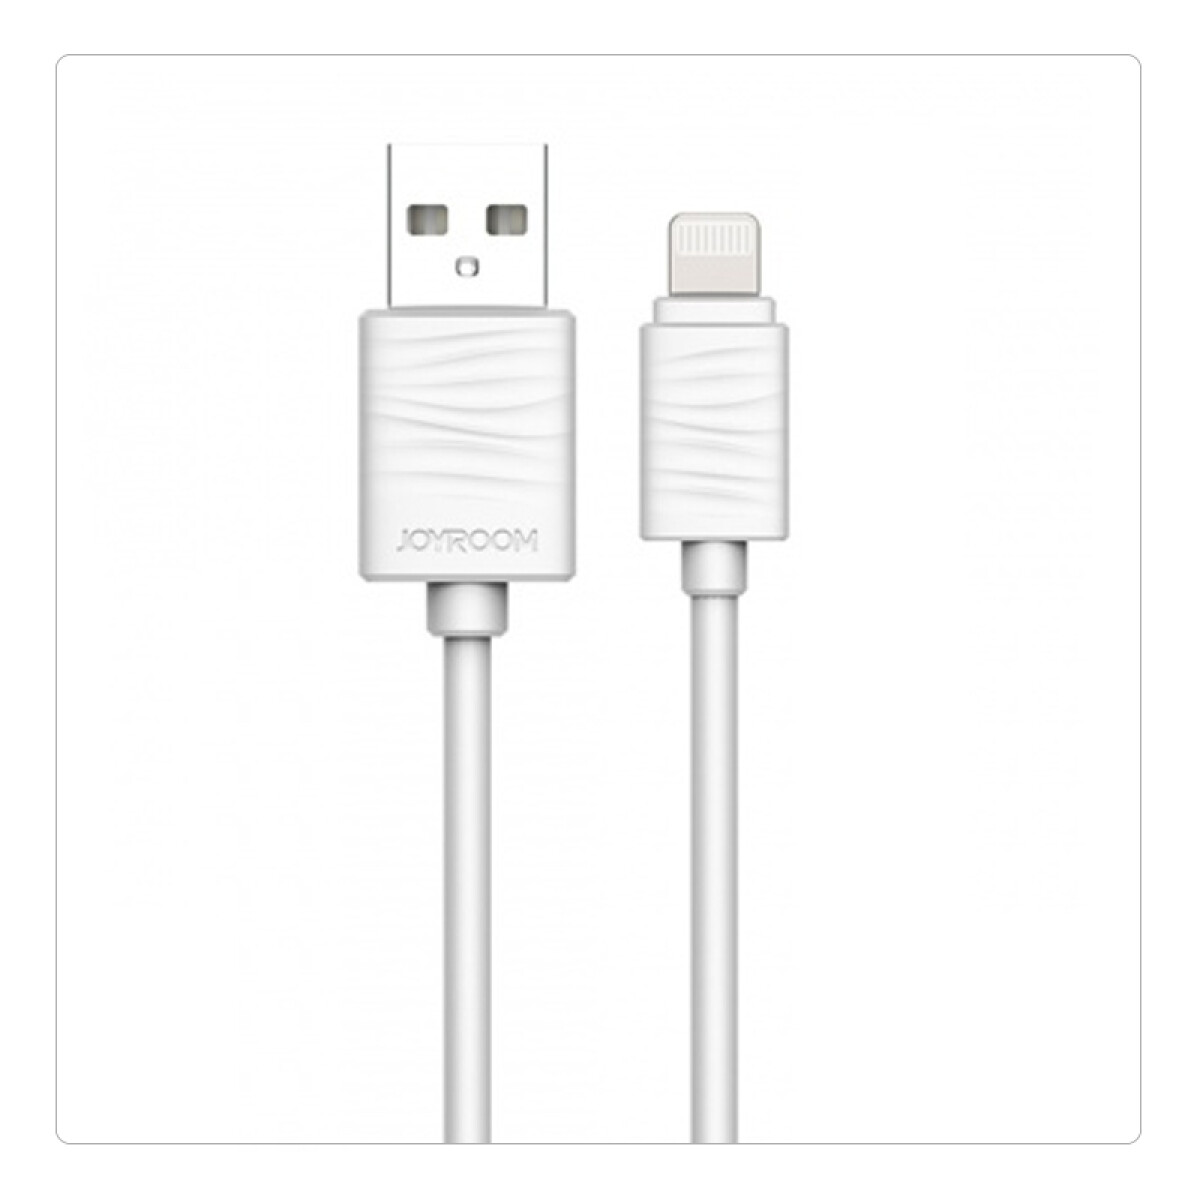 Cable Lightning Joyroom blanco - Unica 